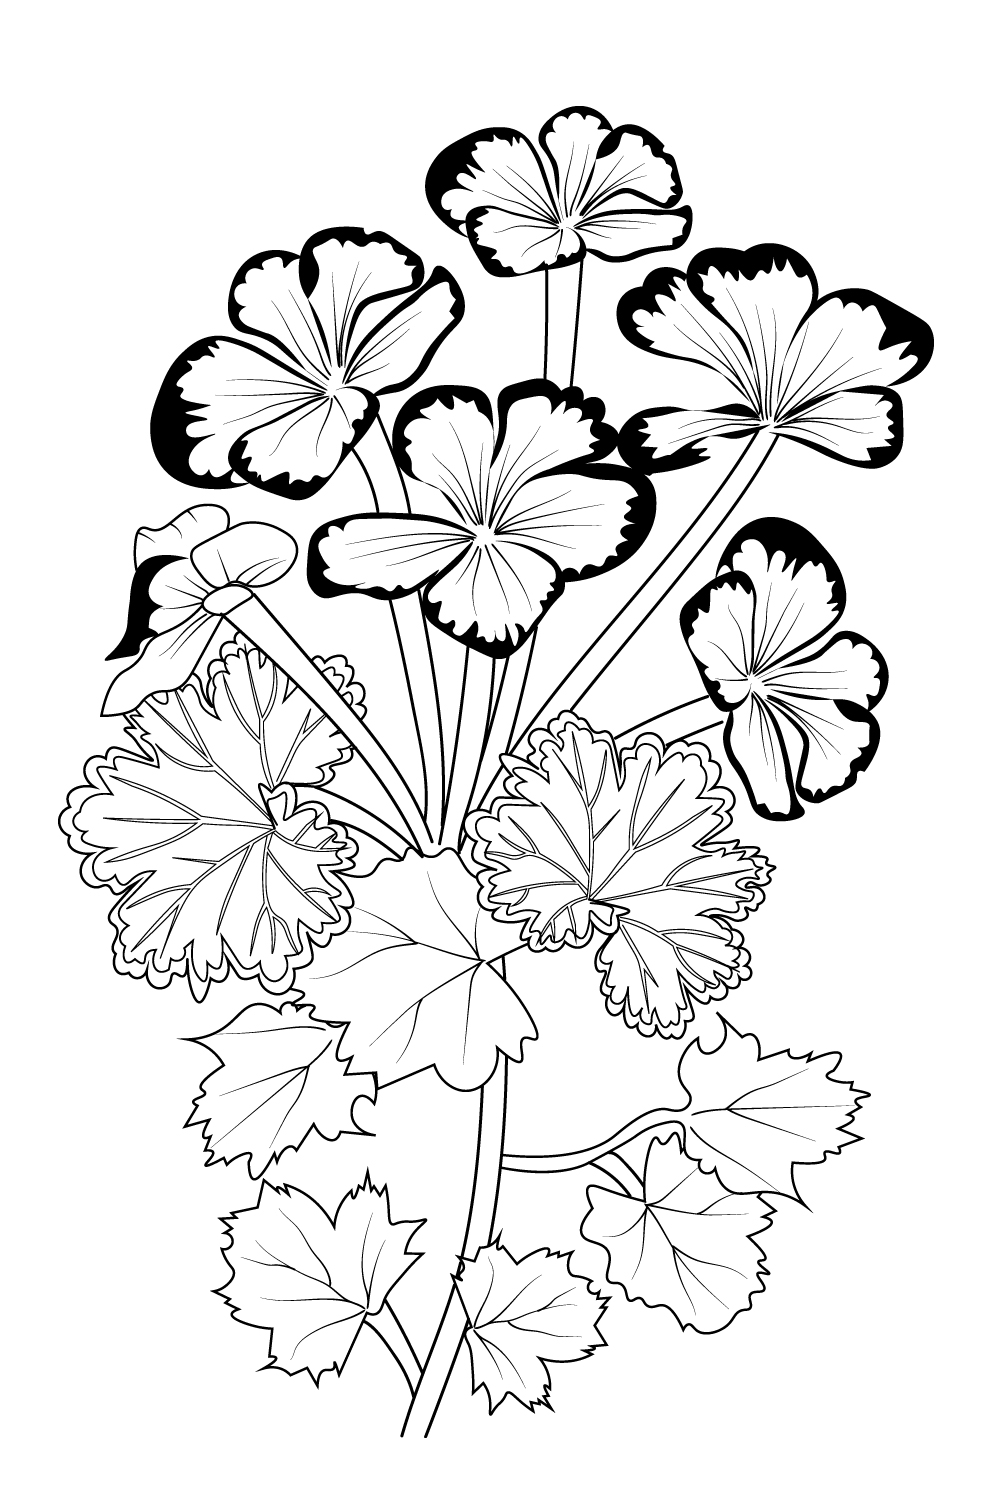 coloring easy geranium drawing, pencil geranium drawing, tattoo geranium flower drawing geranium flower vector art, flower line art, flower coloring pages pinterest preview image.